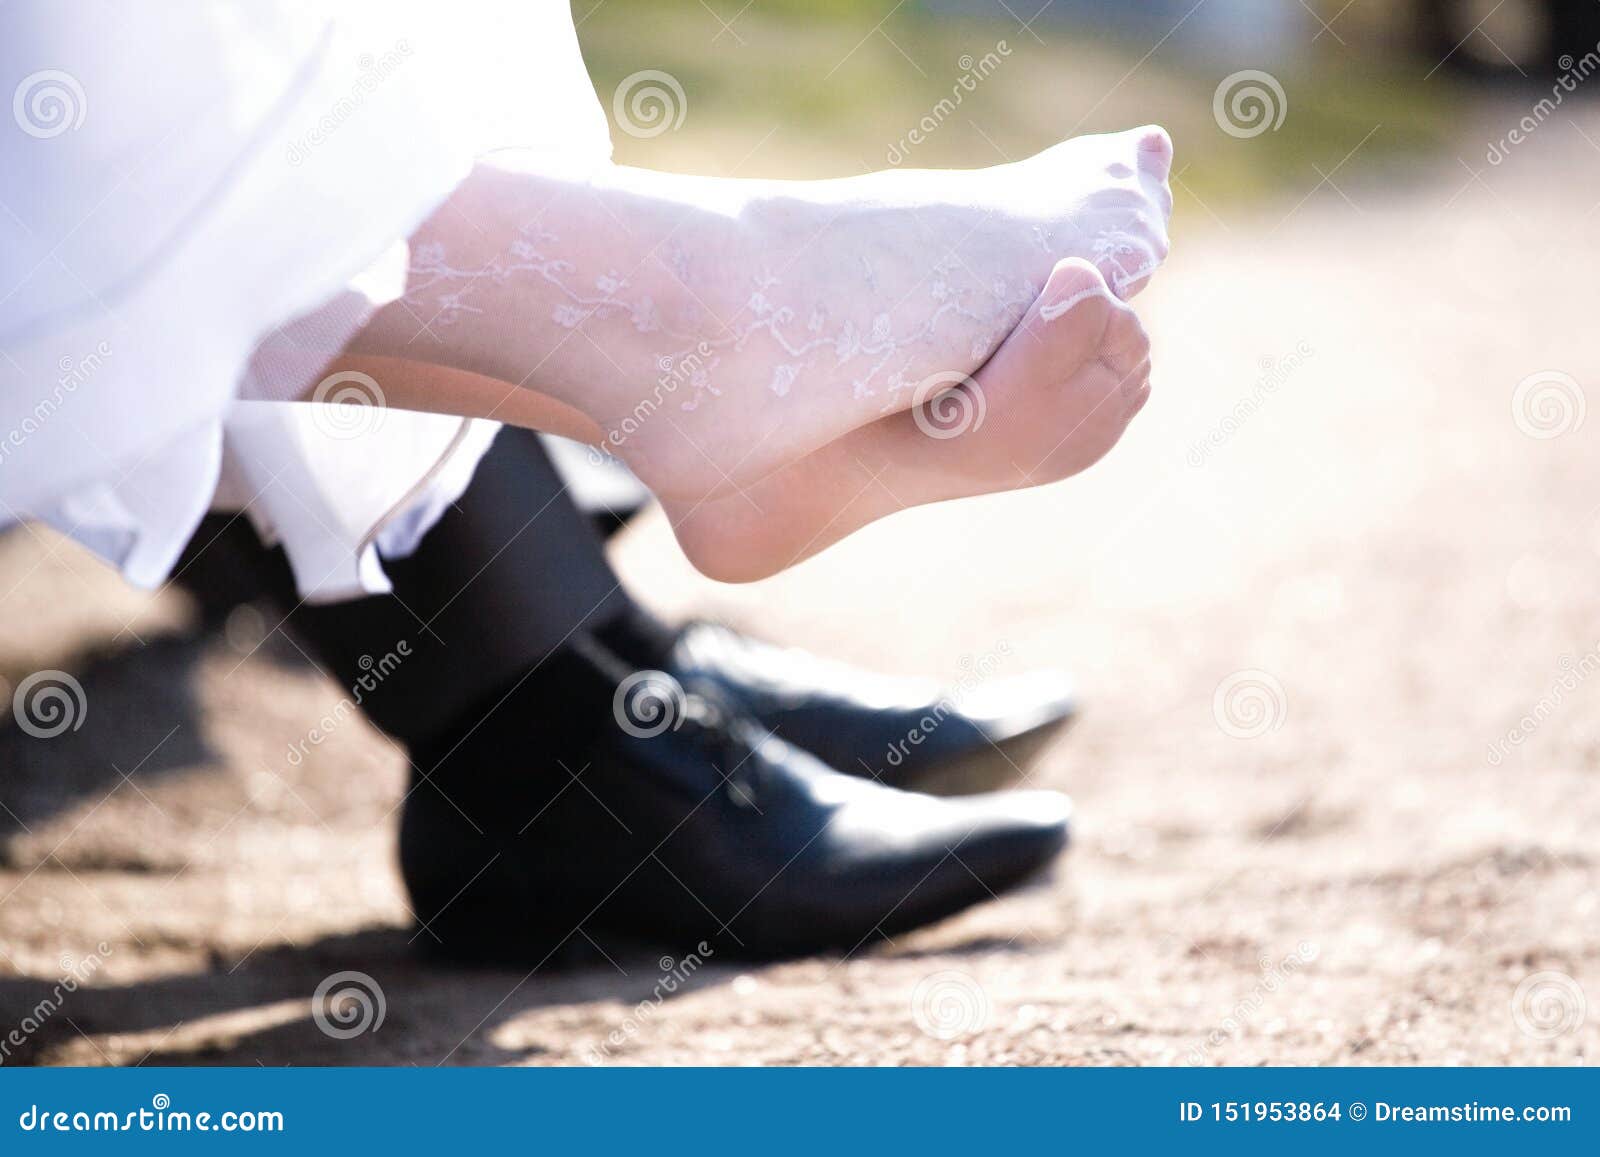 Feet of the Bride and Groom Stock Photo - Image of groom, feet: 151953864